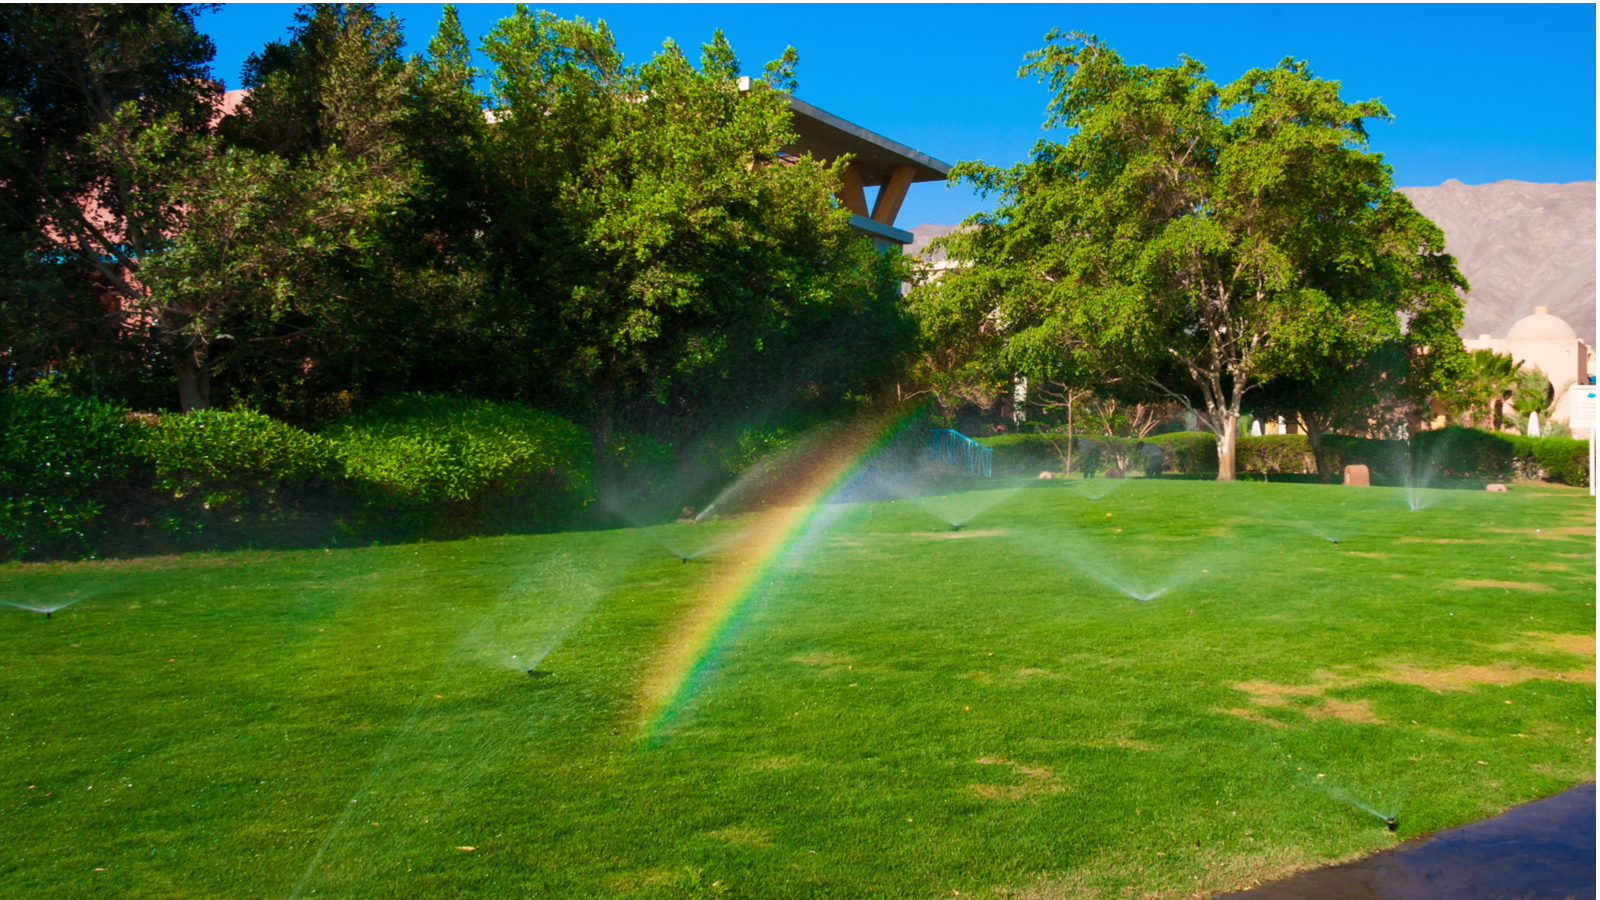 sprinkler-system-startup-Crystal Lake Park-MO | Crystal Lake Park, MO area sprinkler systems | Lawn Sprinklers of St. Louis